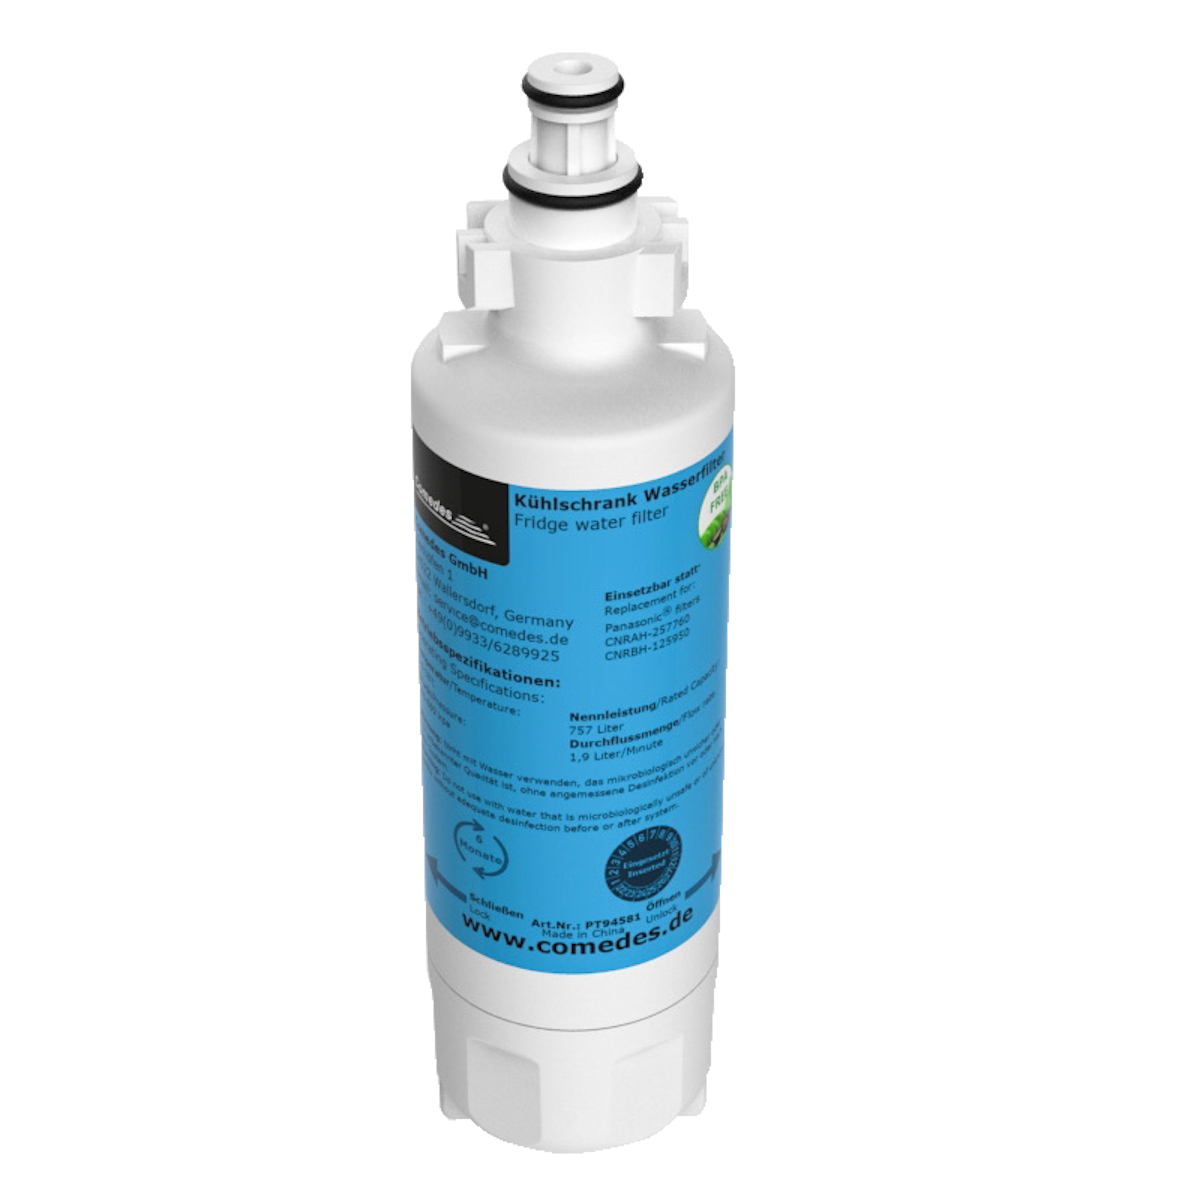 mm) Filterkartusche Wasserfilter Panasonic (44 einsetzbar COMEDES CNRAH-257760 statt